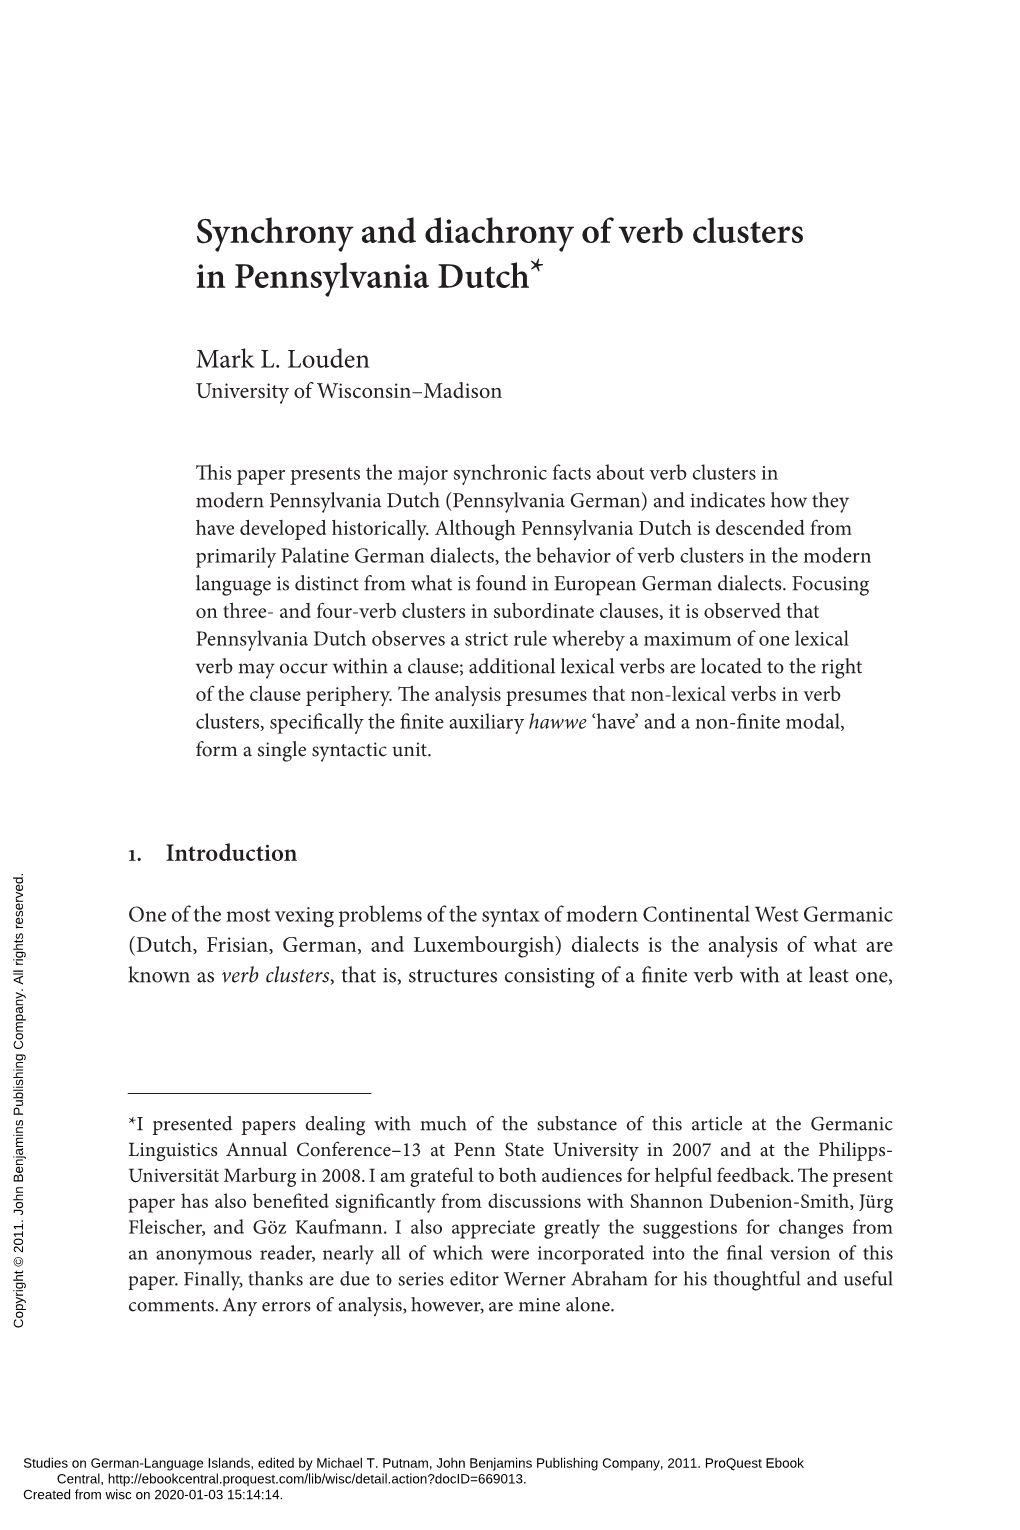 Synchrony and Diachrony of Verb Clusters in Pennsylvania Dutch*